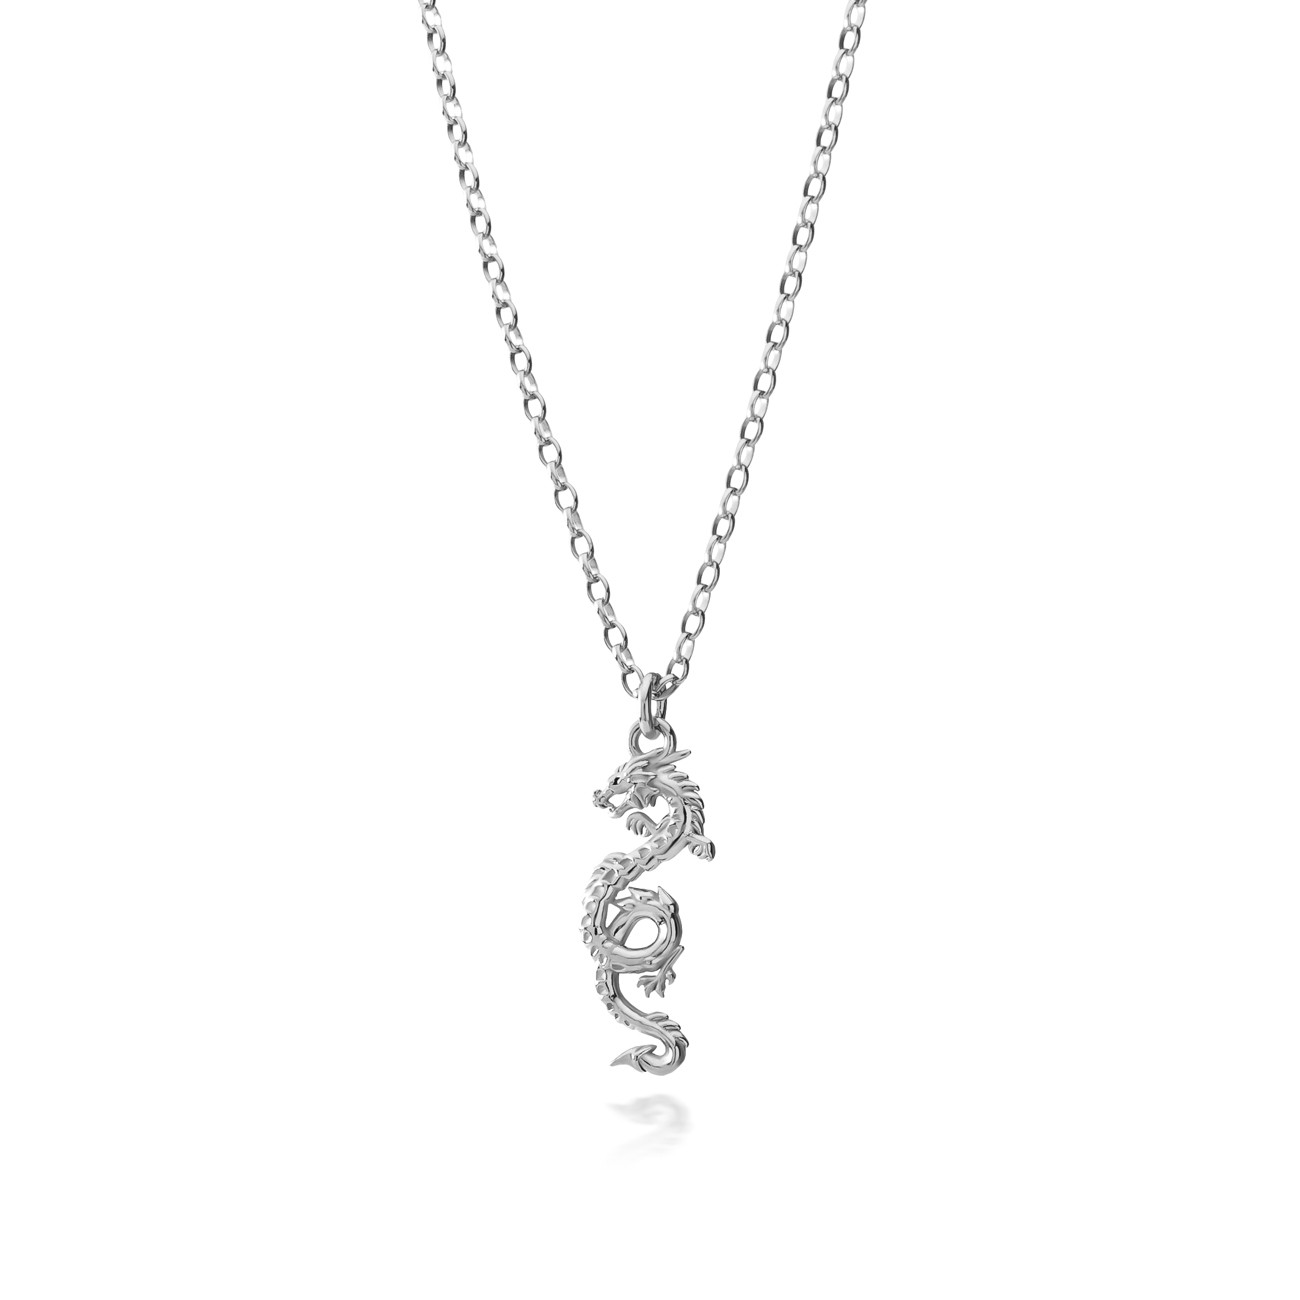 Silver dragon necklace, AUGUSTYNKA x GIORRE